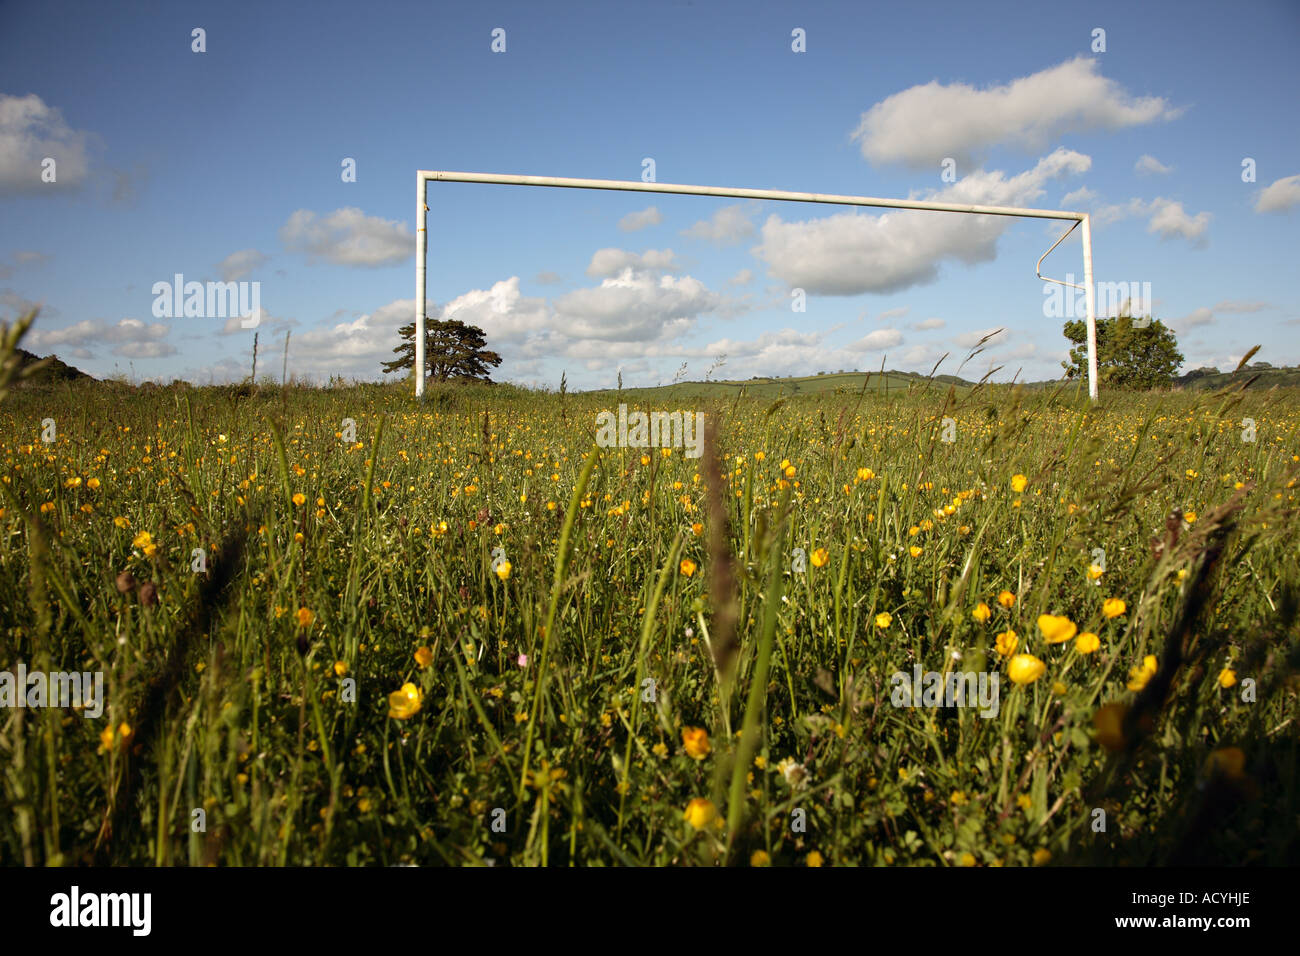 Football Furlough - Football Season is over - football end of season - overgrown soccer pitch once football is finished. Football Furlough Stock Photo